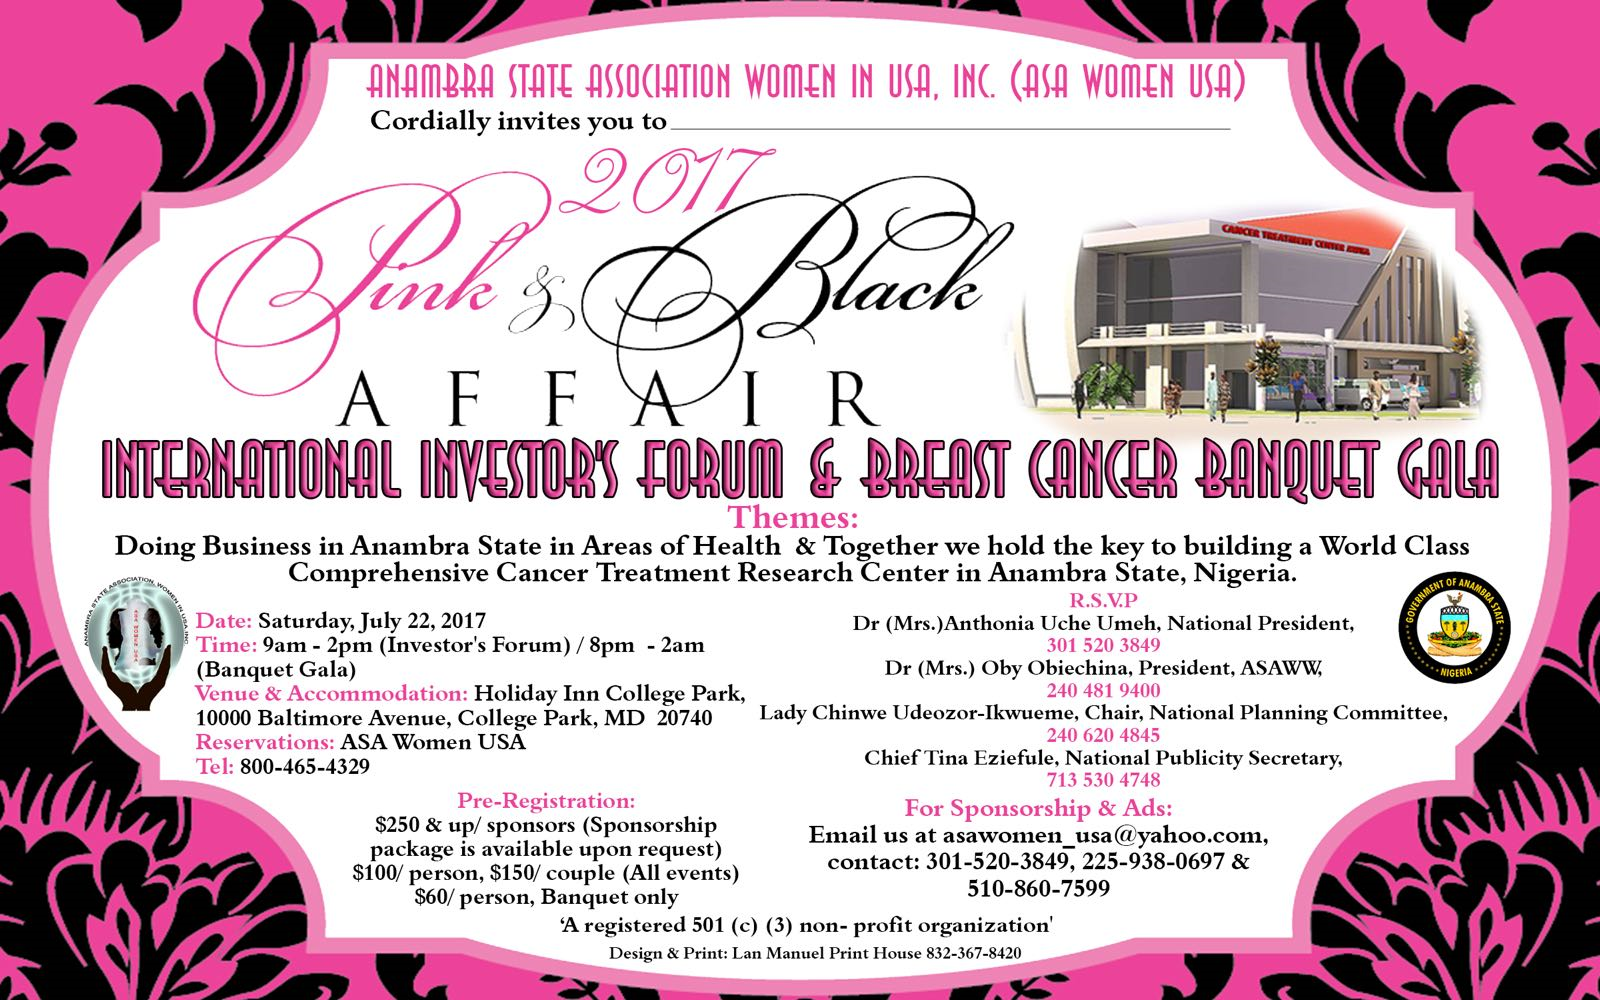 2017 ASA Women USA Pink & Black Affair International Investor's Forum and Breast Cancer Banquet Gala